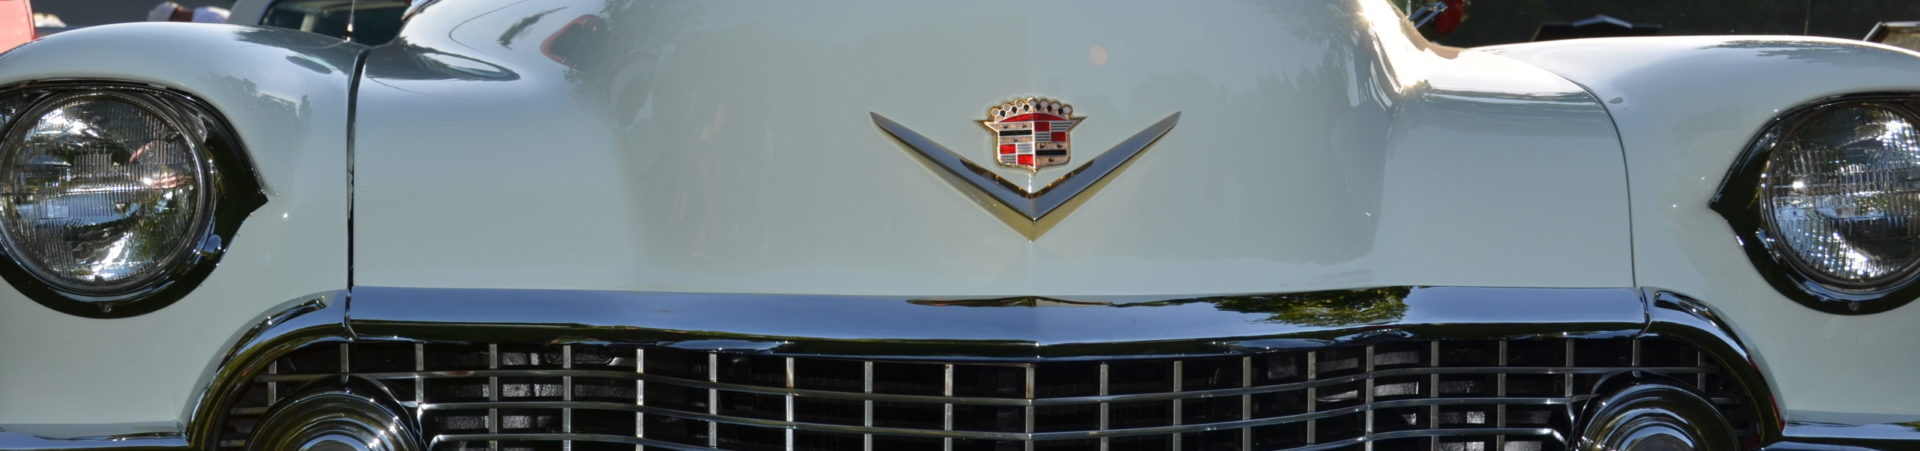 1957 Chrysler 300 – Fiore Dibernardo